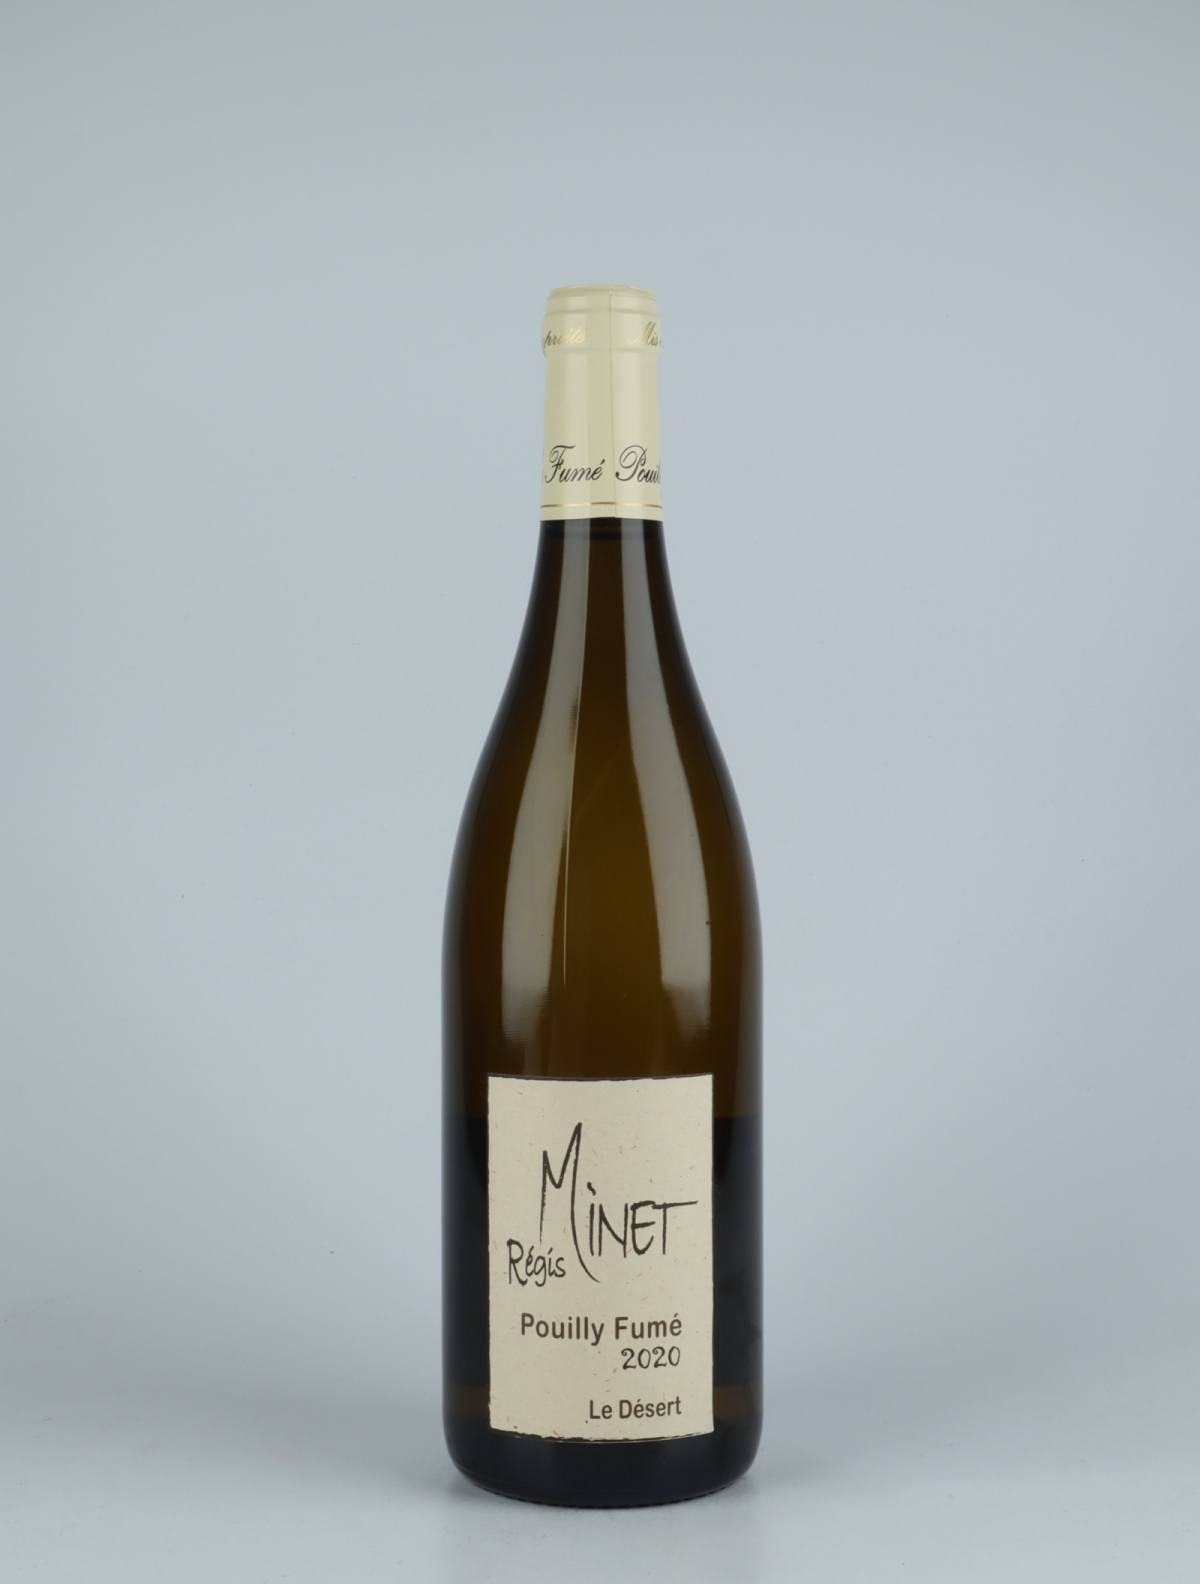 A bottle 2020 Pouilly Fumé - Le Desert White wine from Régis Minet, Loire in France